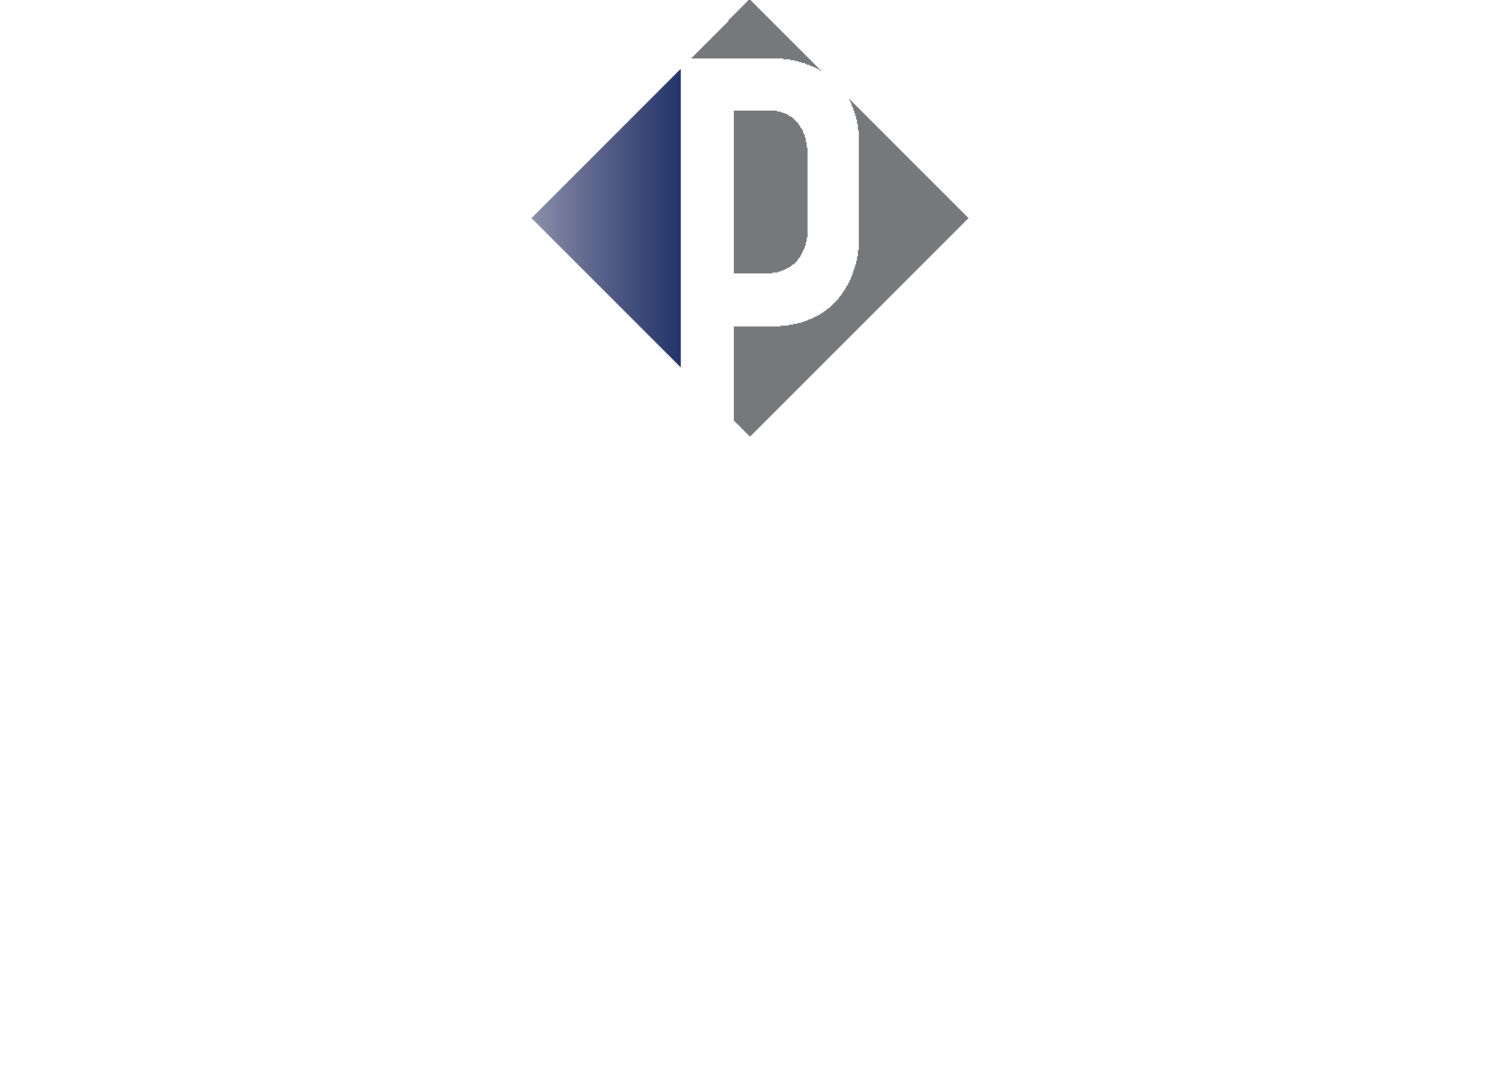 Preston Wealth Advisors